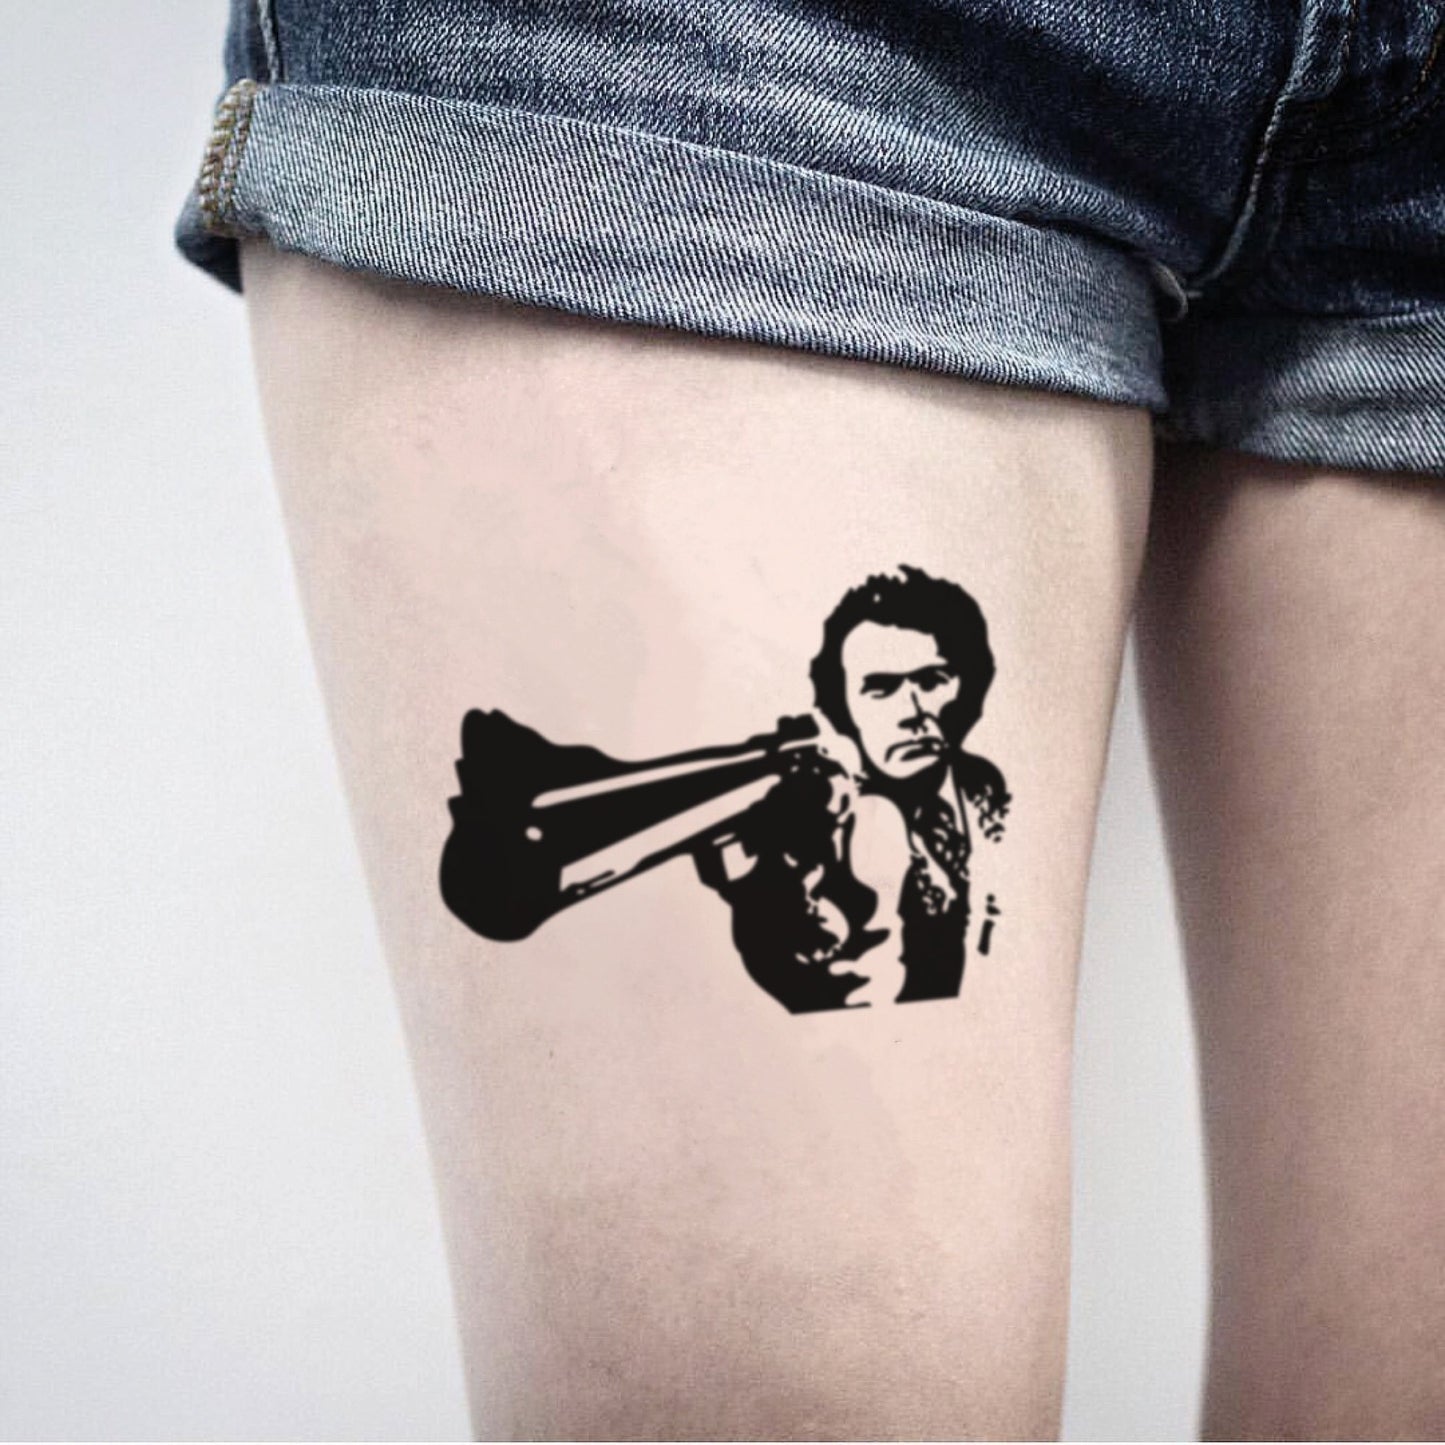 fake medium dirty harry Portrait temporary tattoo sticker design idea on thigh